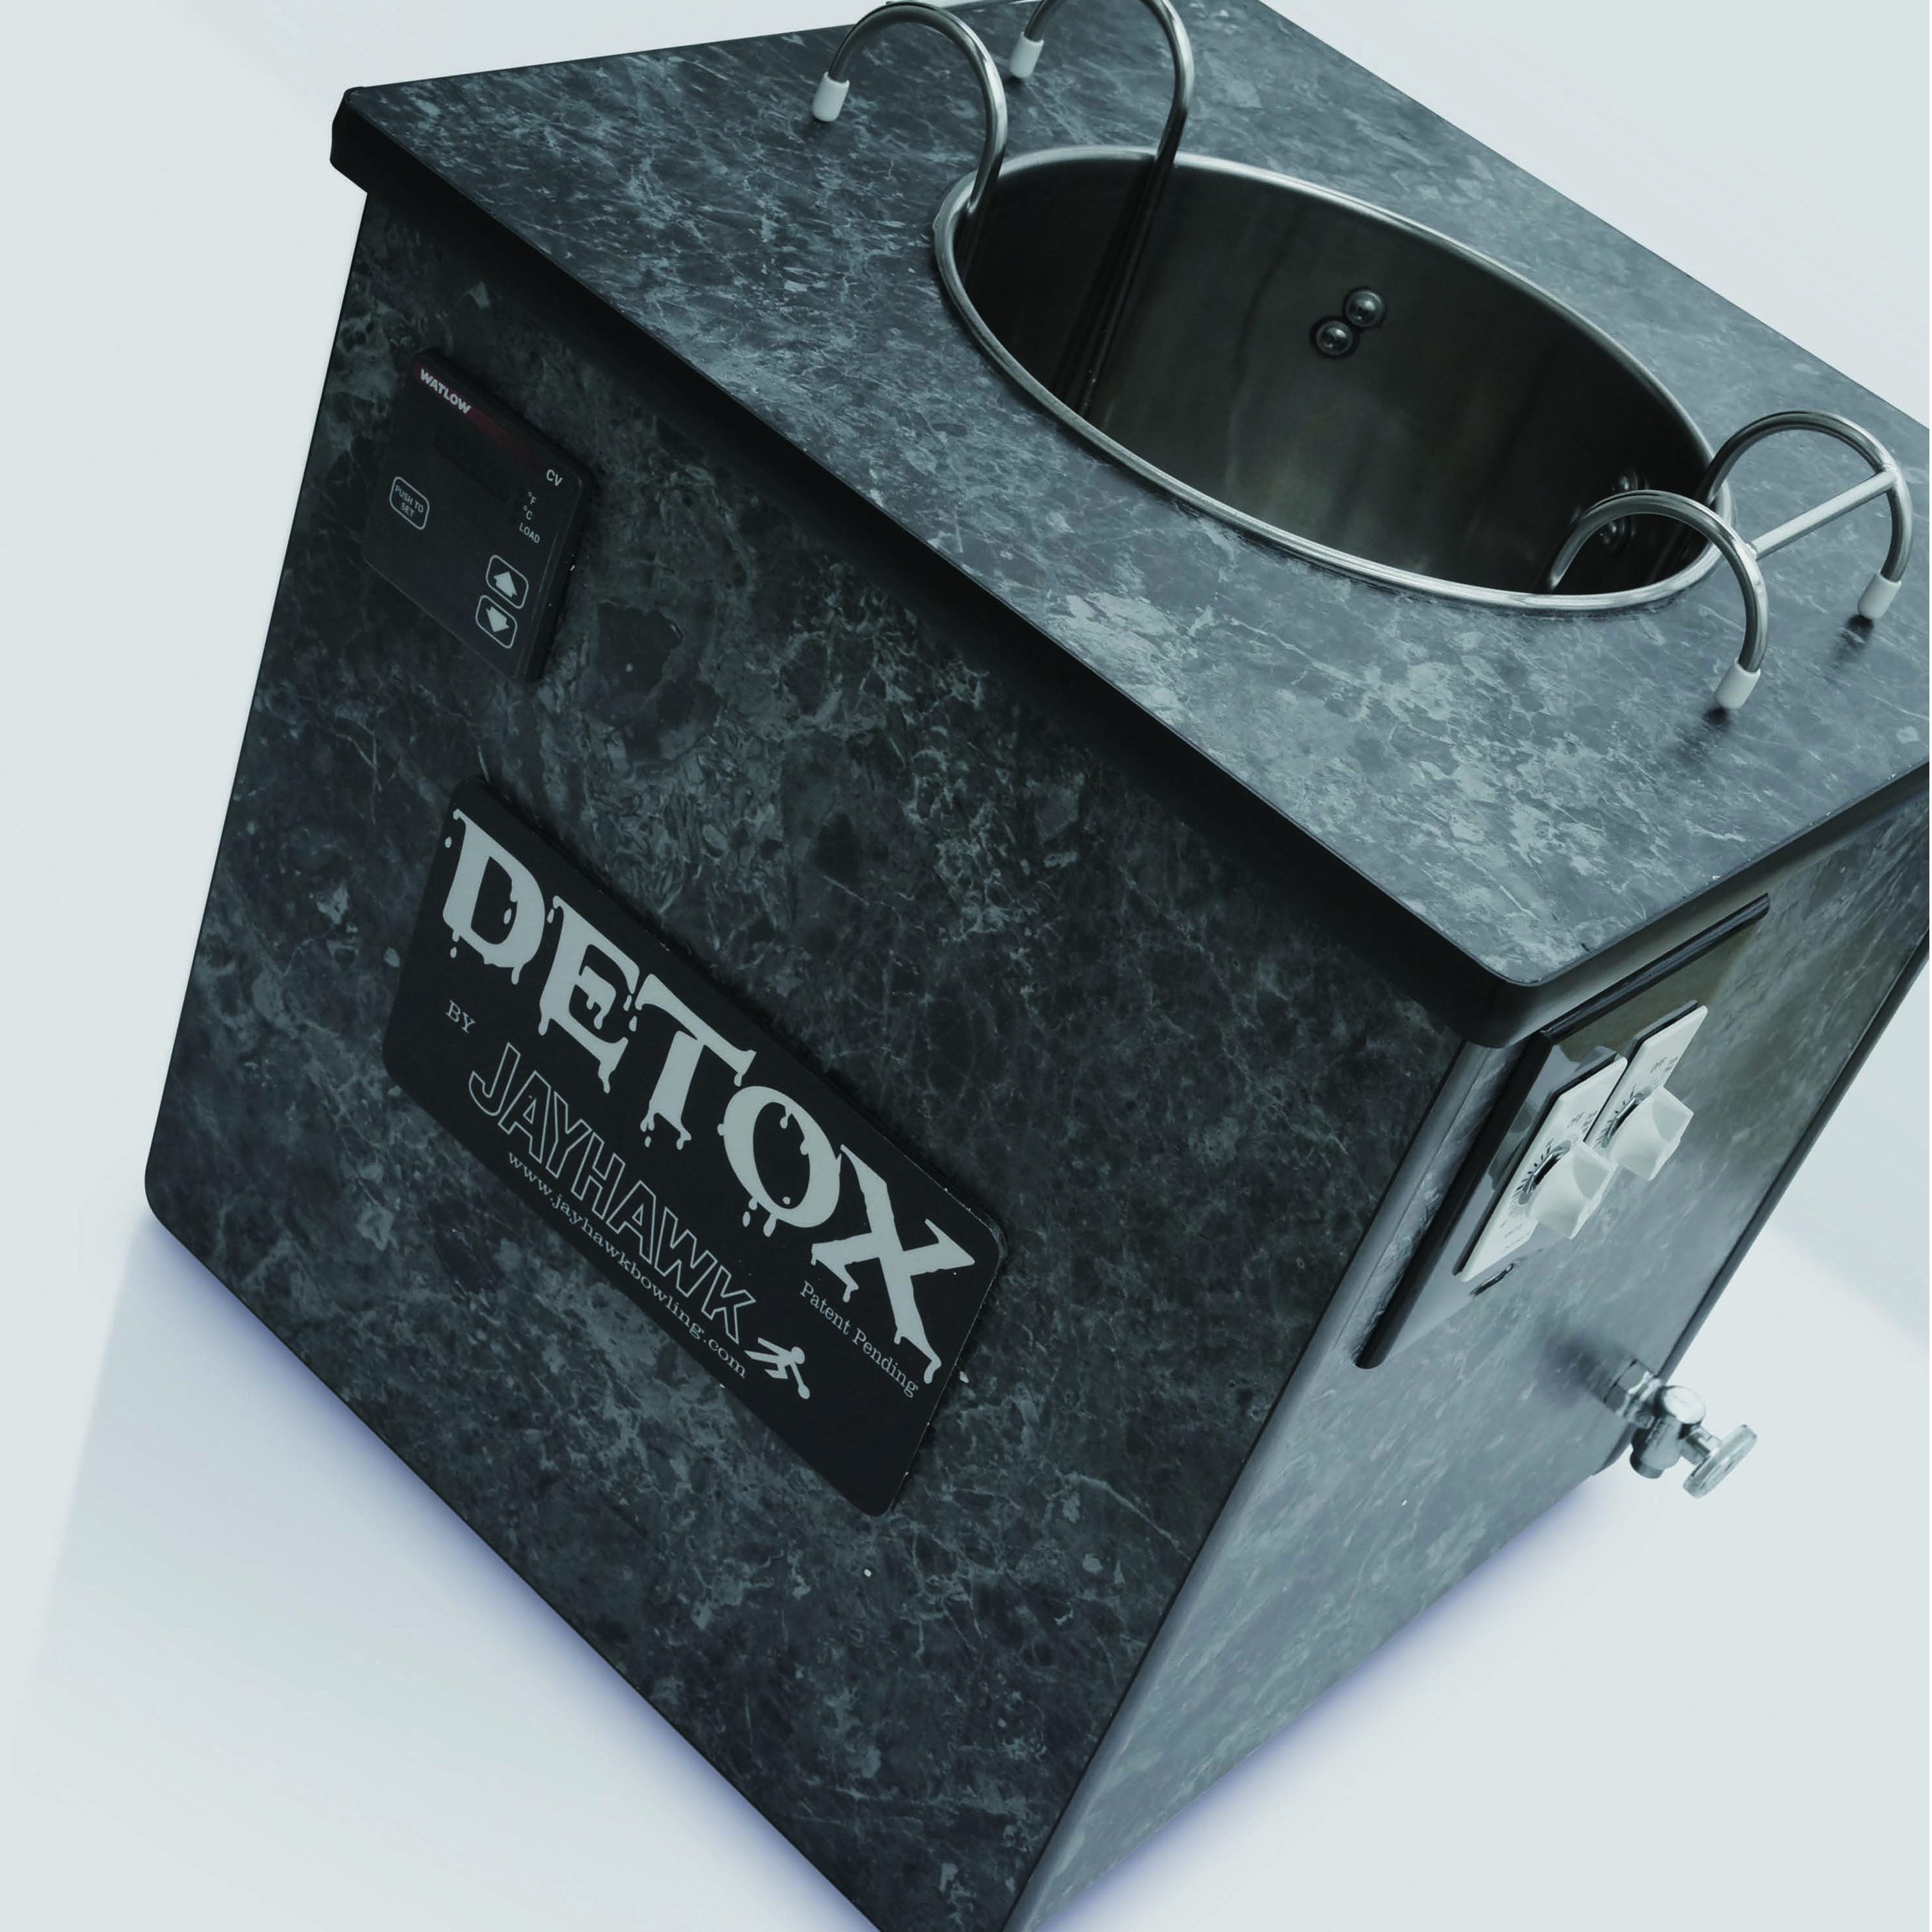 DETOX デトックス【オイル抜き】|ボウリング プロショップ 用品 通販 